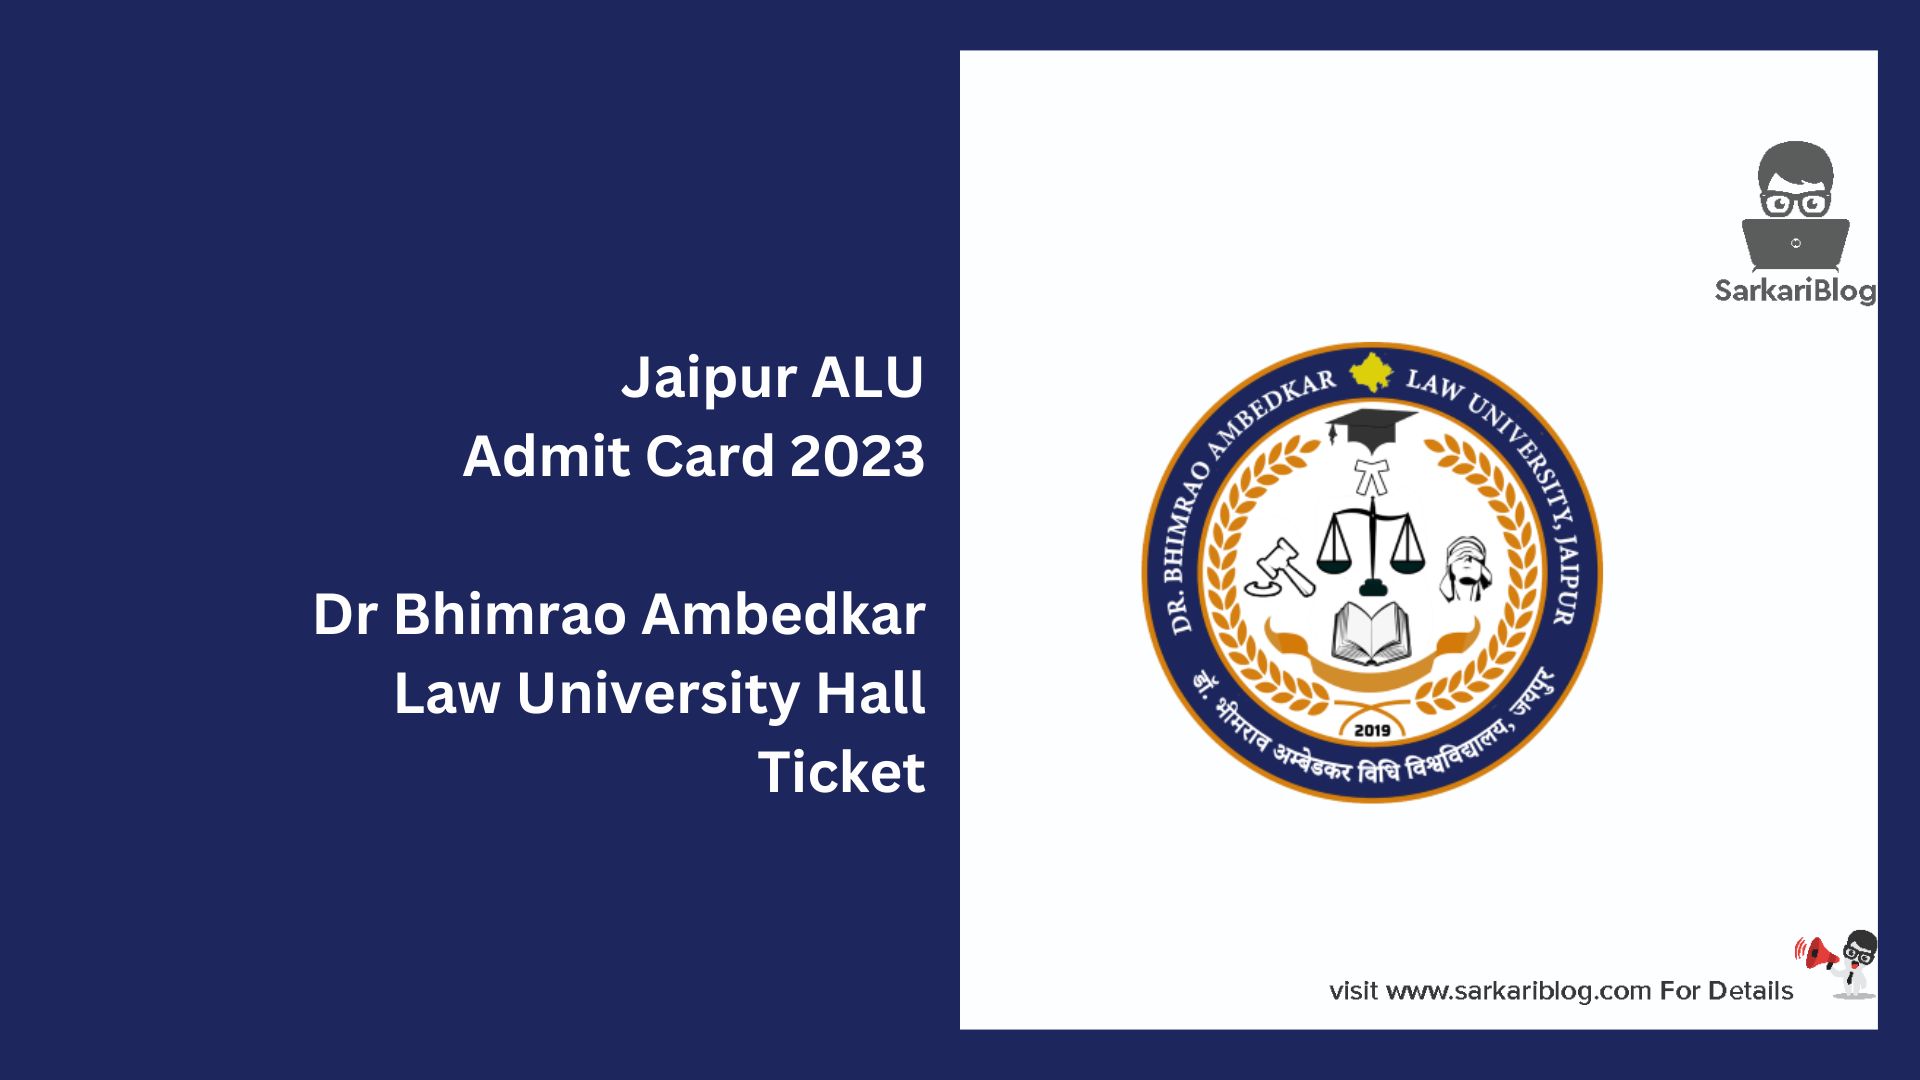 Jaipur ALU Admit Card 2023